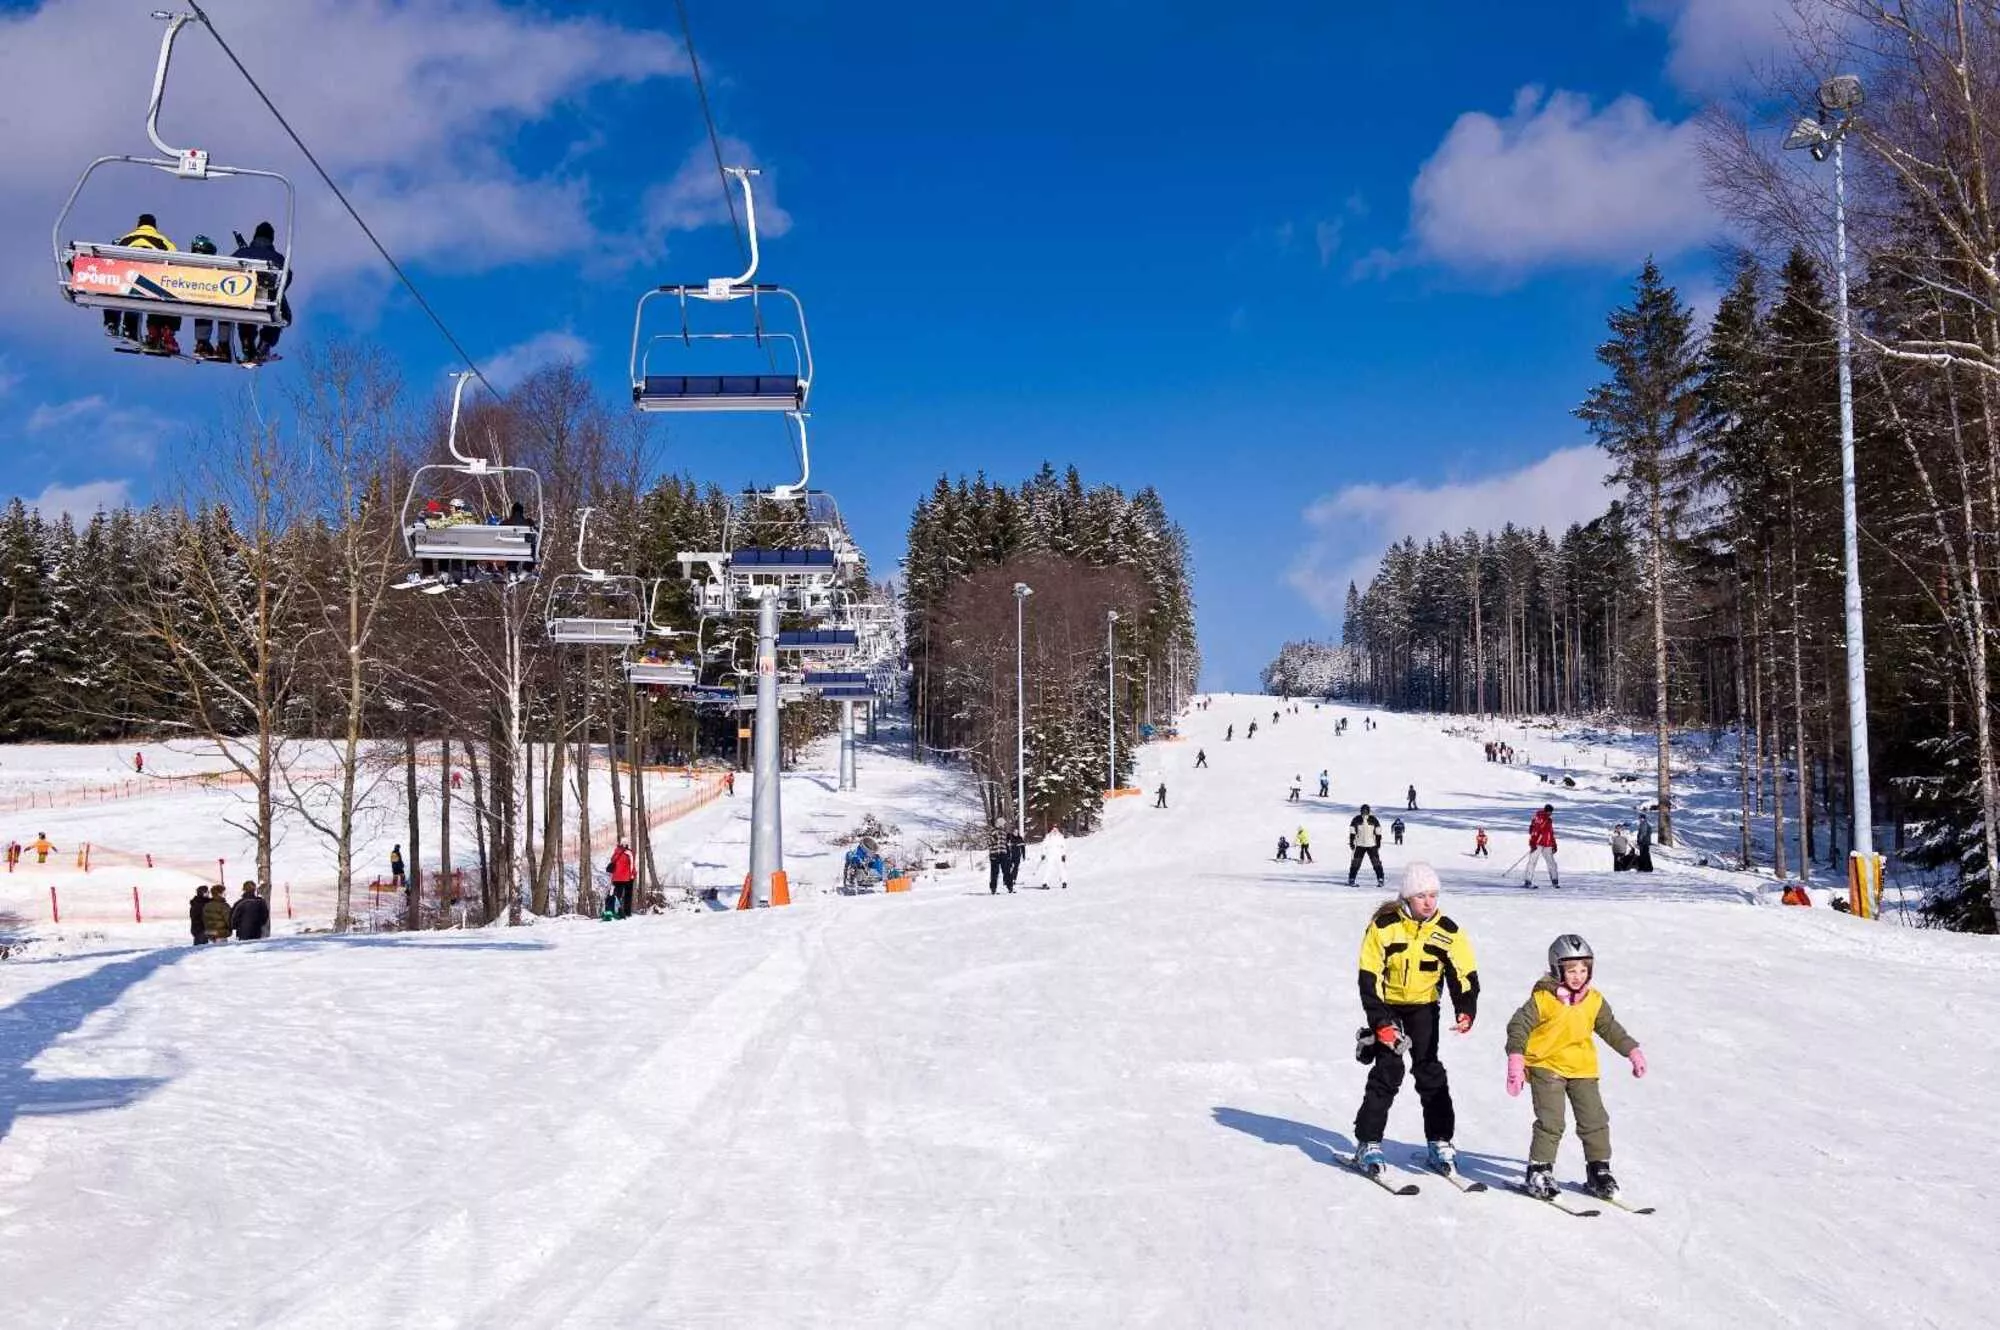 Lipno in Czech Republic, Europe | Snowboarding,Skiing - Rated 3.2